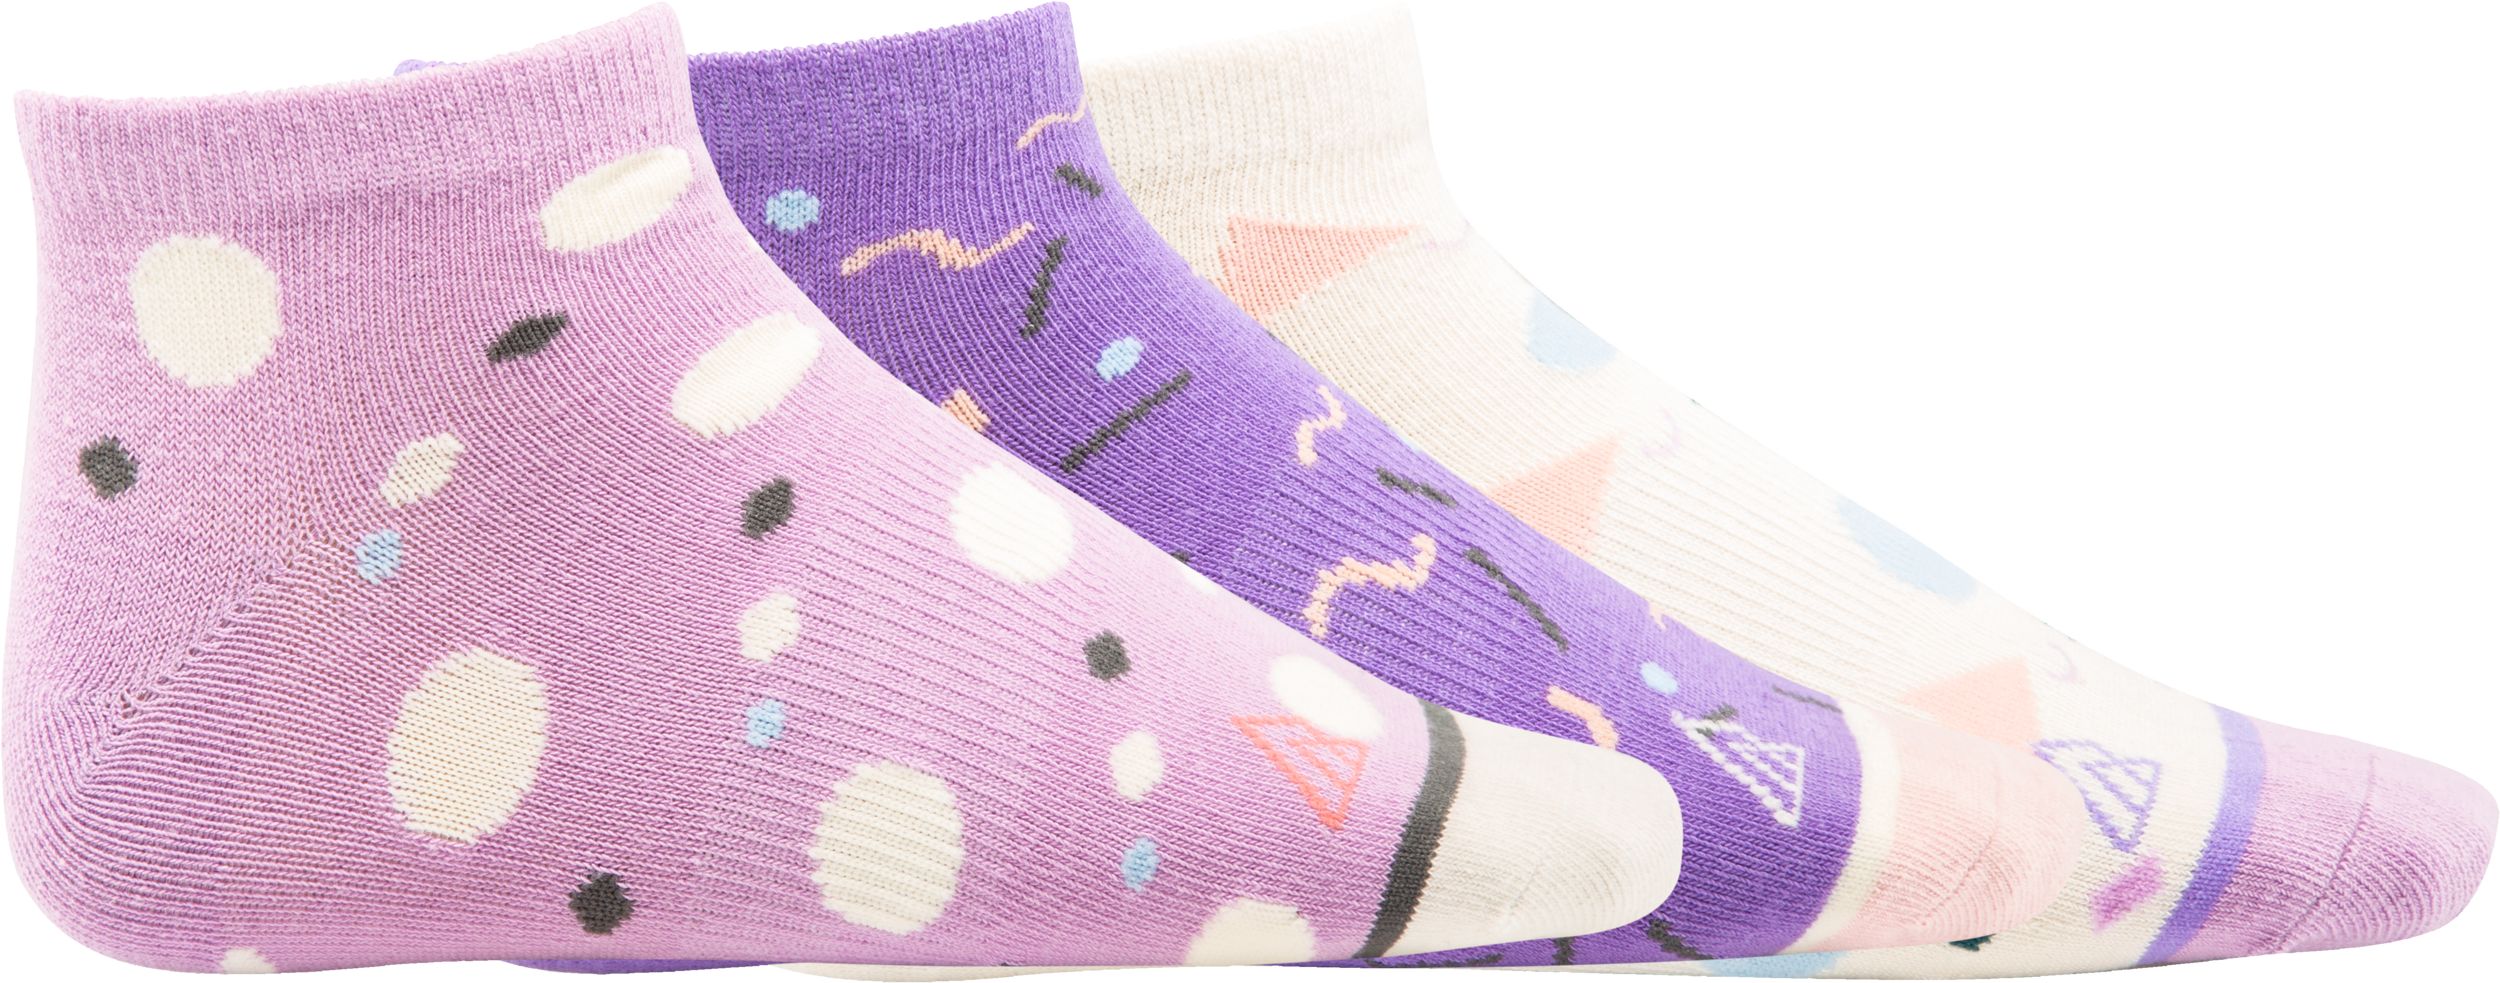 Ripzone Girls' Purple Shapes No Show Socks - 3 Pack